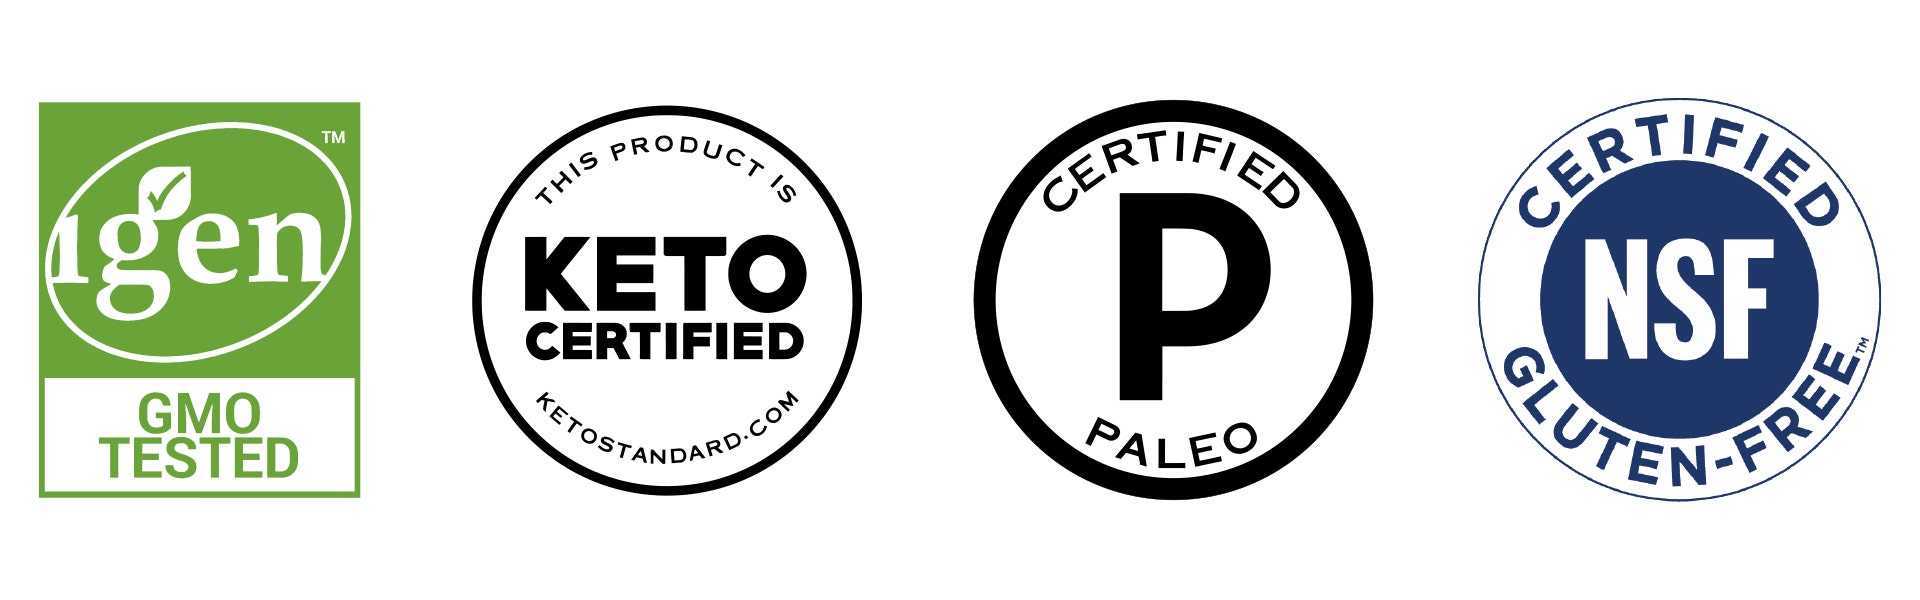 collagen cbd 15mg certifications